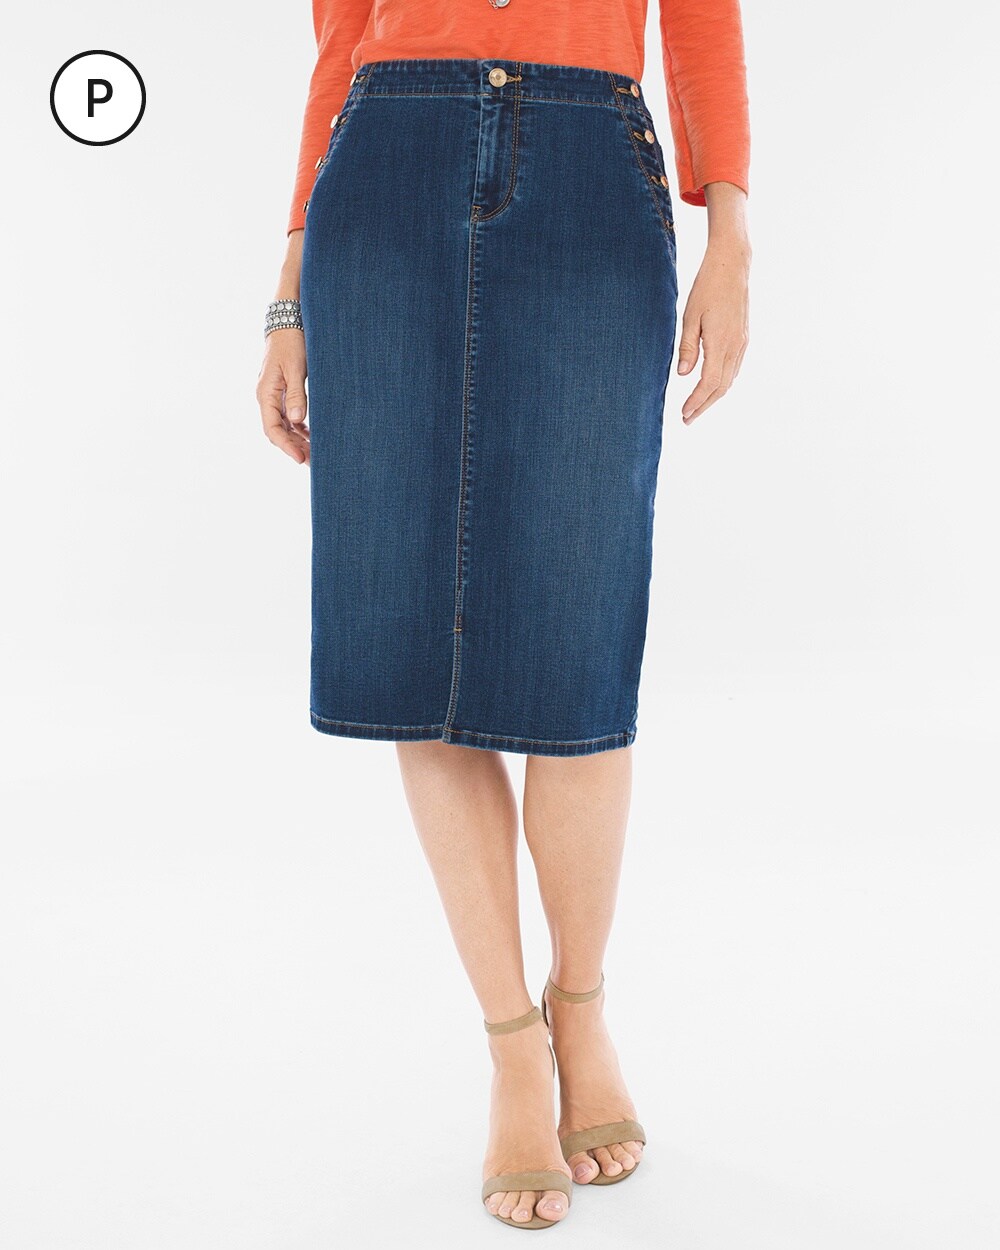 Buy Woman Within Women's Plus Size Petite Flared Denim Skirt, Indigo, 12  Plus Petite at Amazon.in